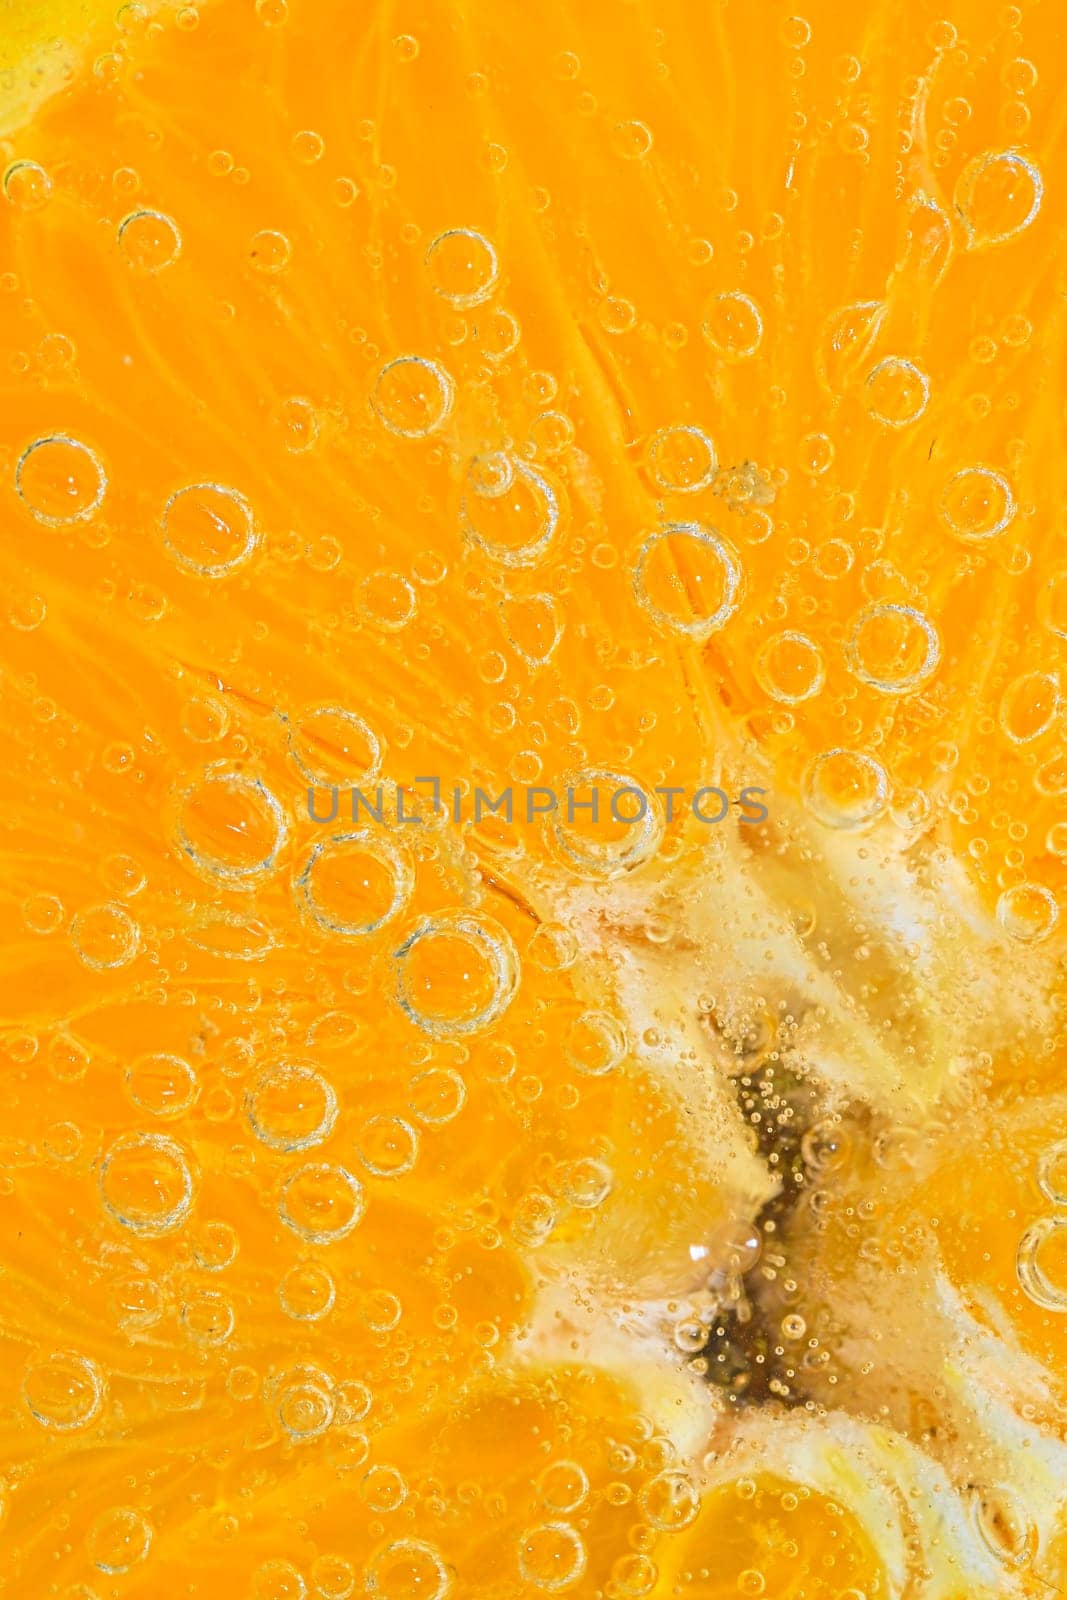 Slice of ripe orange fruit in water. Close-up of orange fruit in liquid with bubbles. Slice of ripe orange fruit in sparkling water. Macro image of fruit in carbonated water